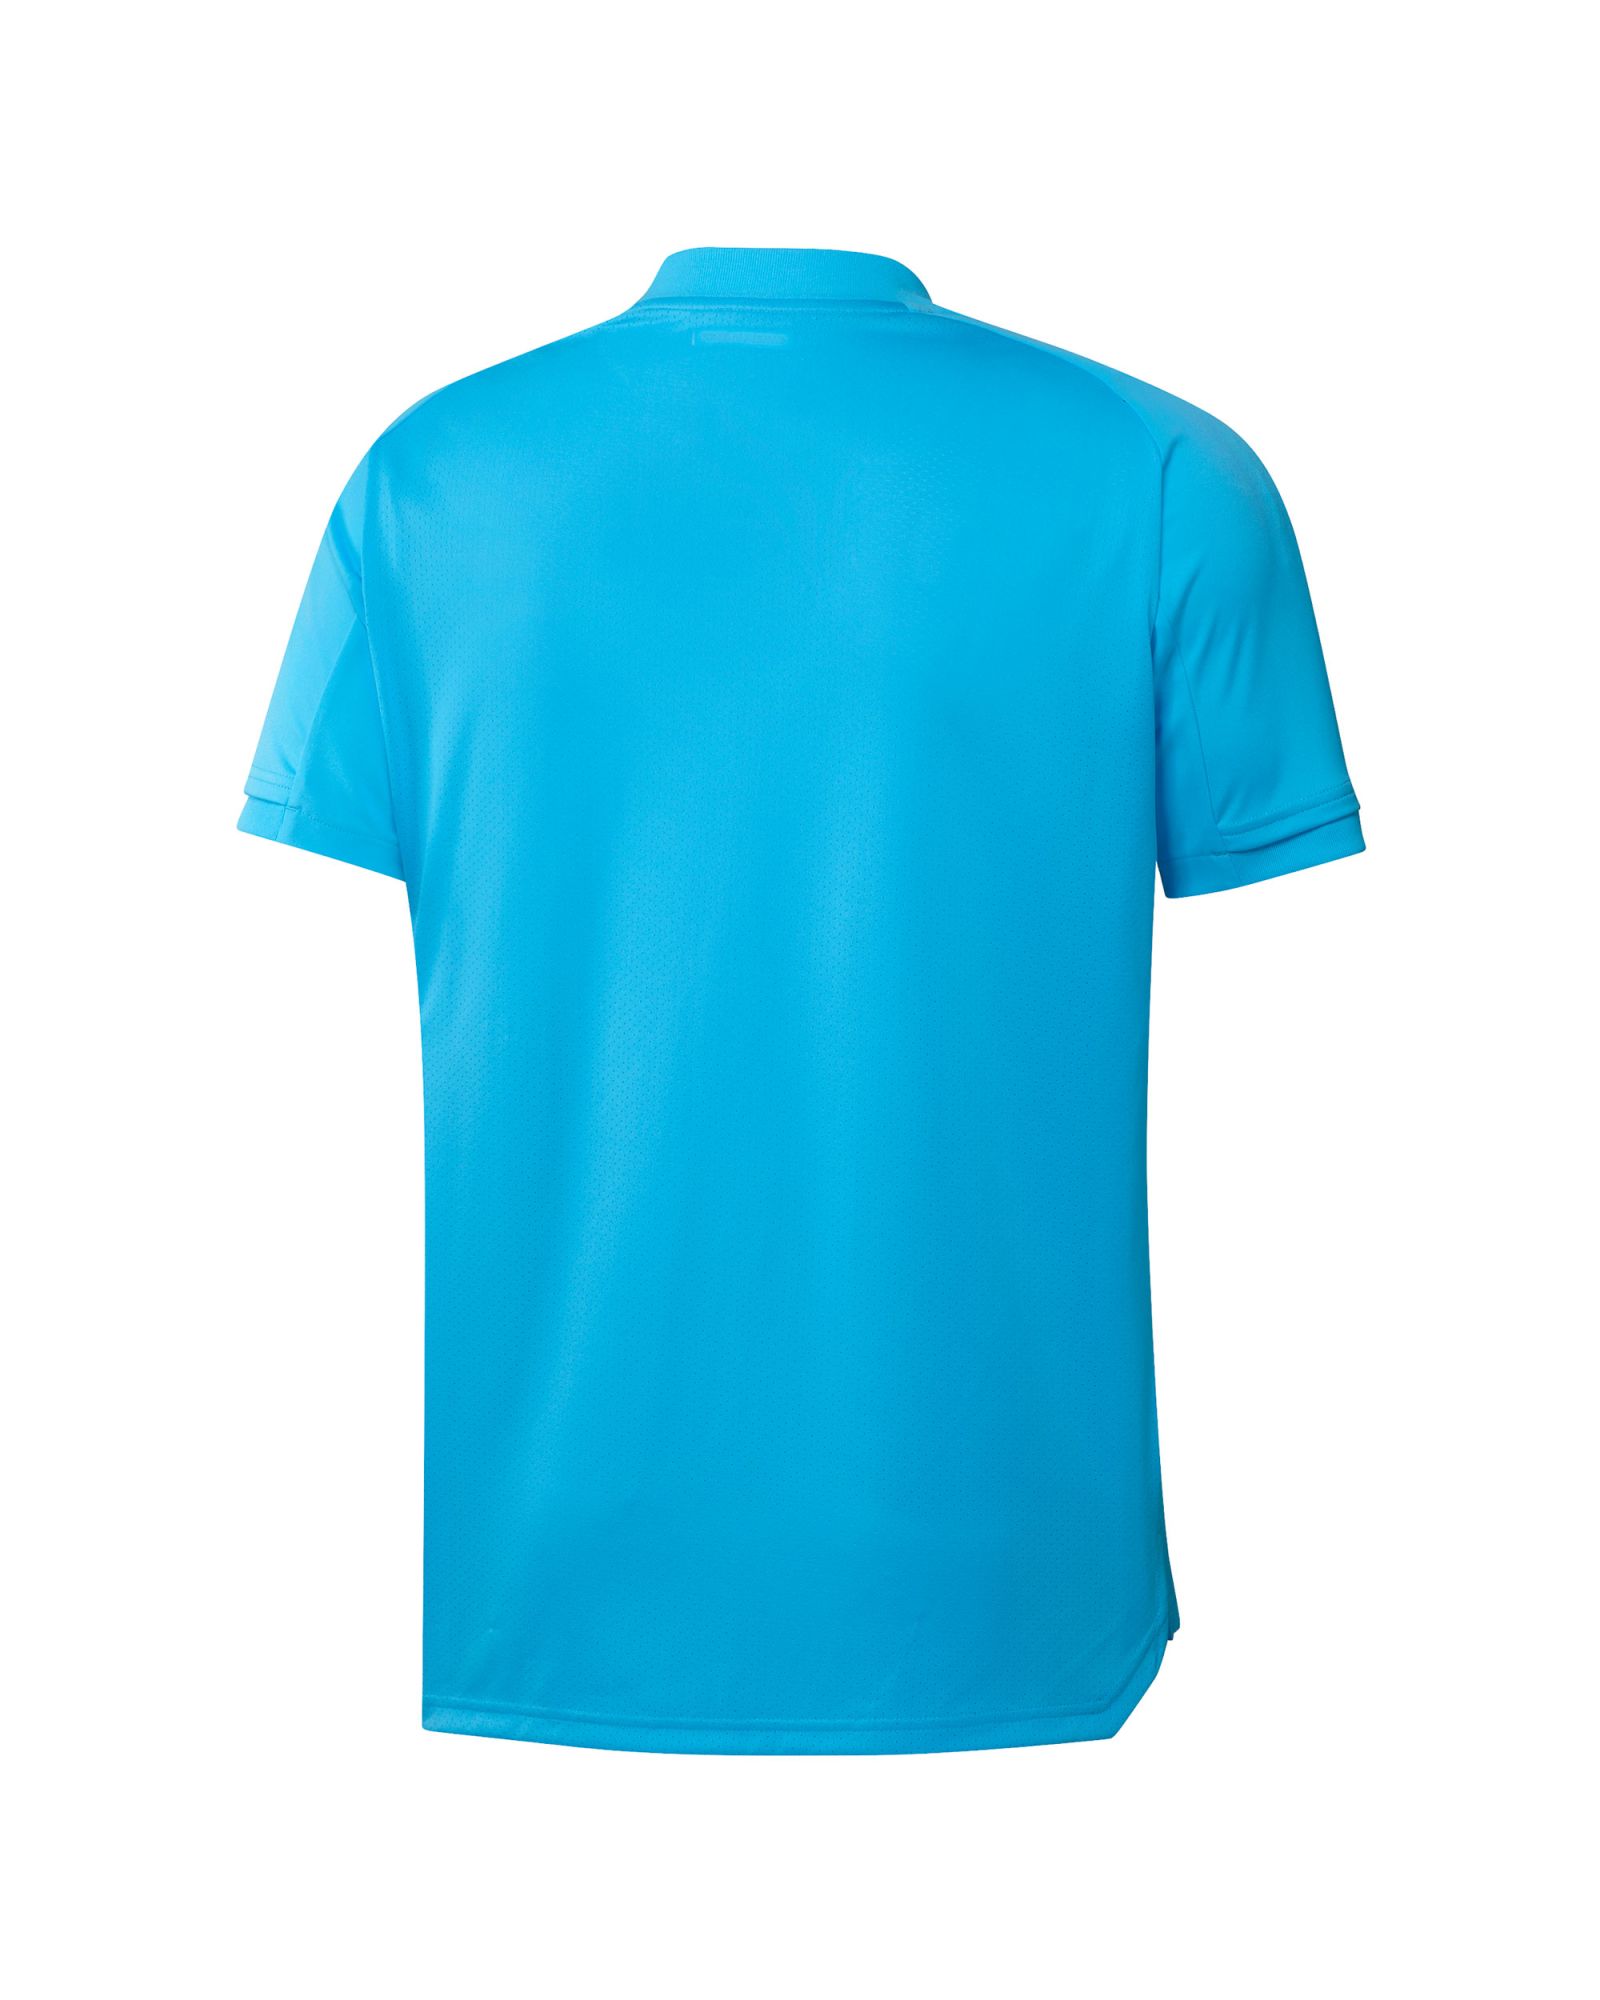 Camiseta de Training Real Madrid 2020/2021 Azul - Fútbol Factory